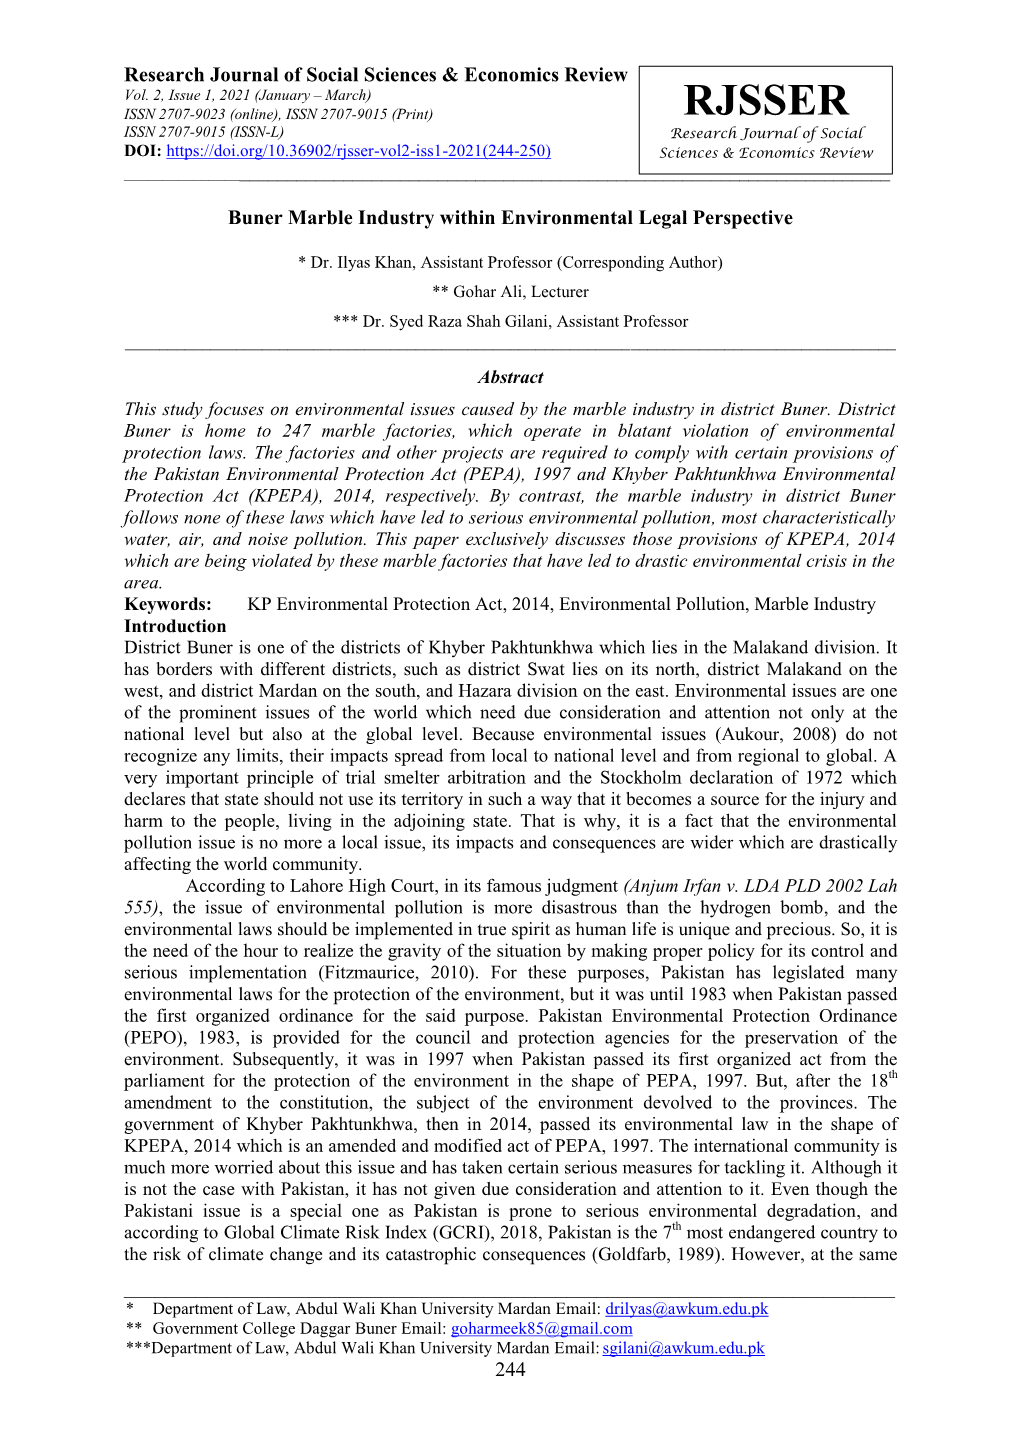 RJSSER ISSN 2707-9015 (ISSN-L) Research Journal of Social DOI: Scienc Es & Economics Review ______